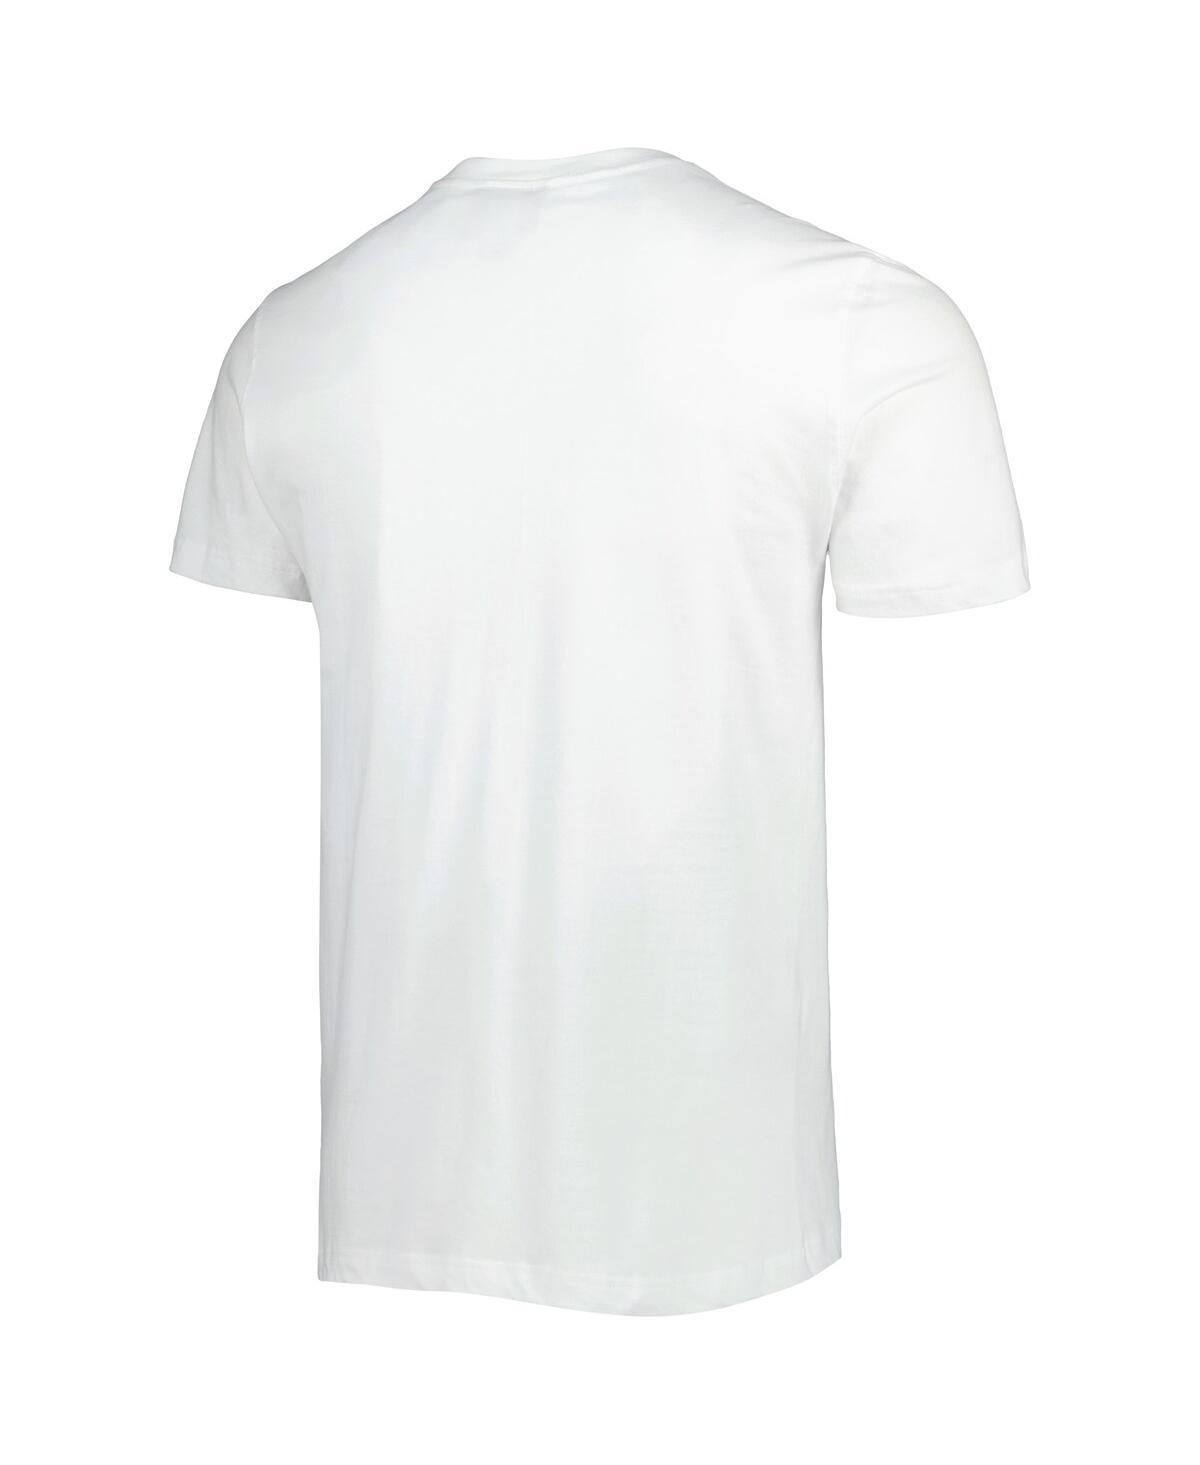 Shop New Era Men's  White Boston Red Sox Historical Championship T-shirt